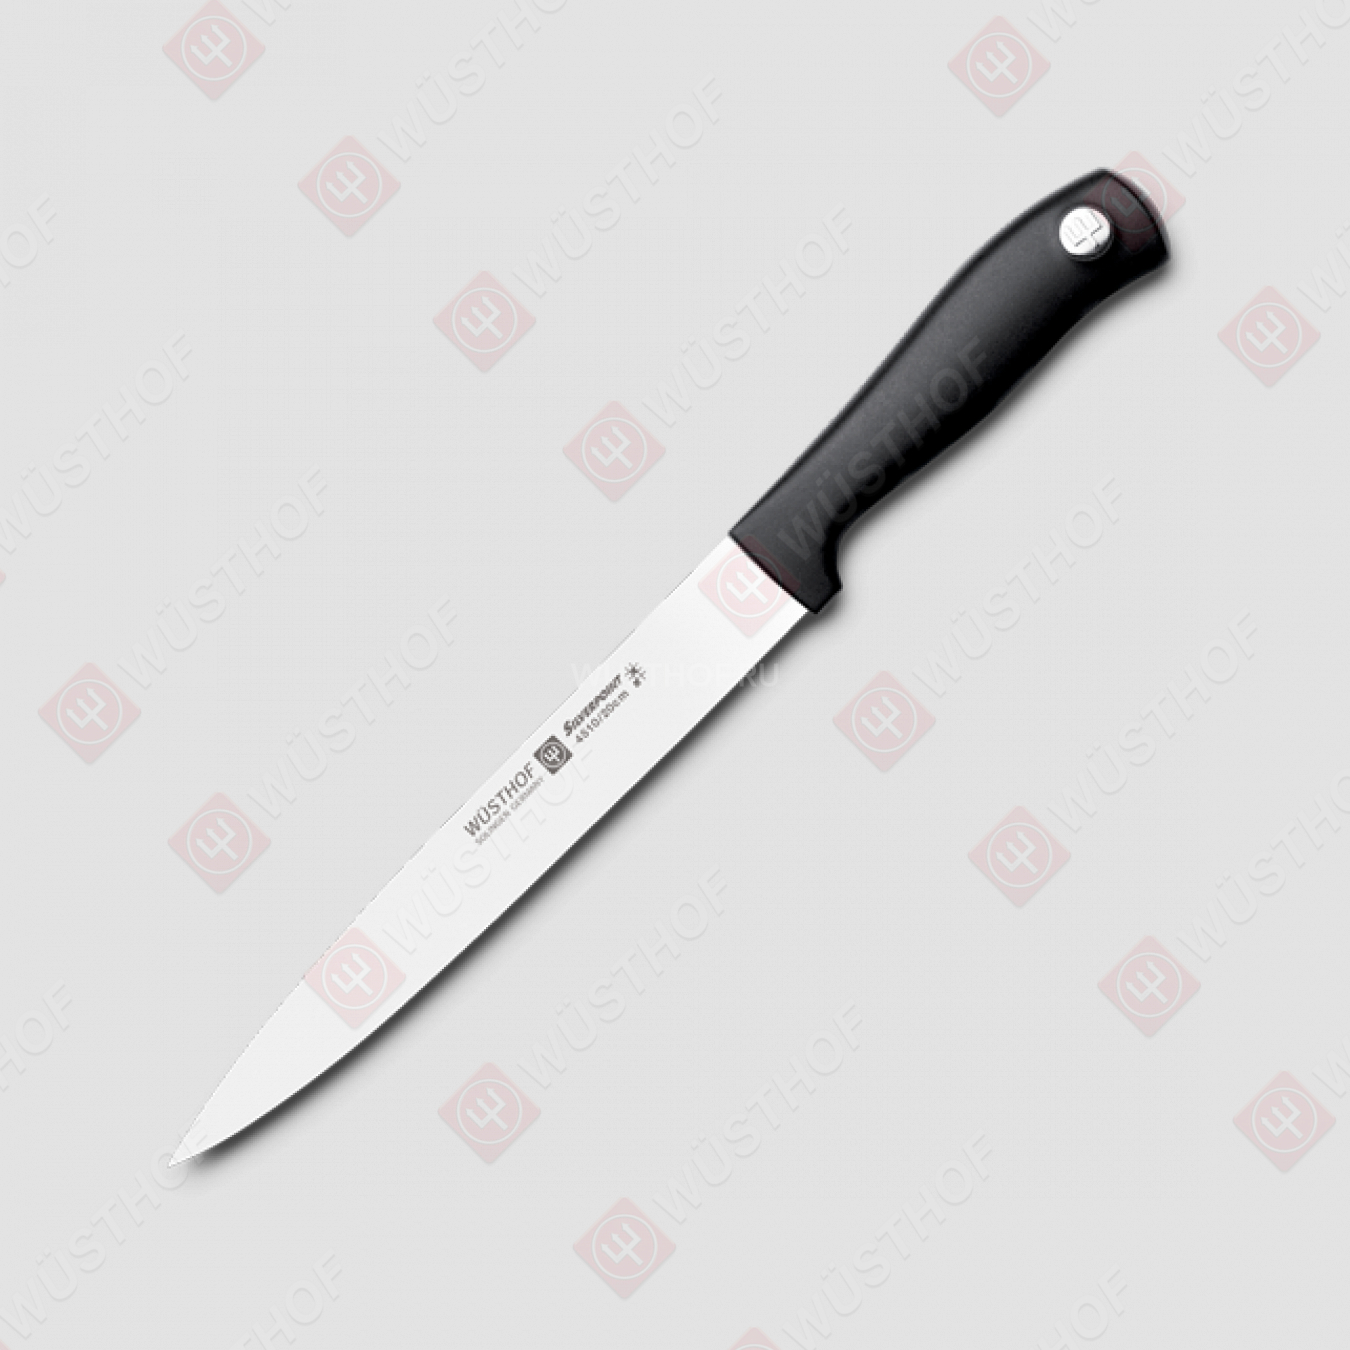 Нож для нарезки 20 см, серия Silverpoint, WUESTHOF, Золинген, Германия